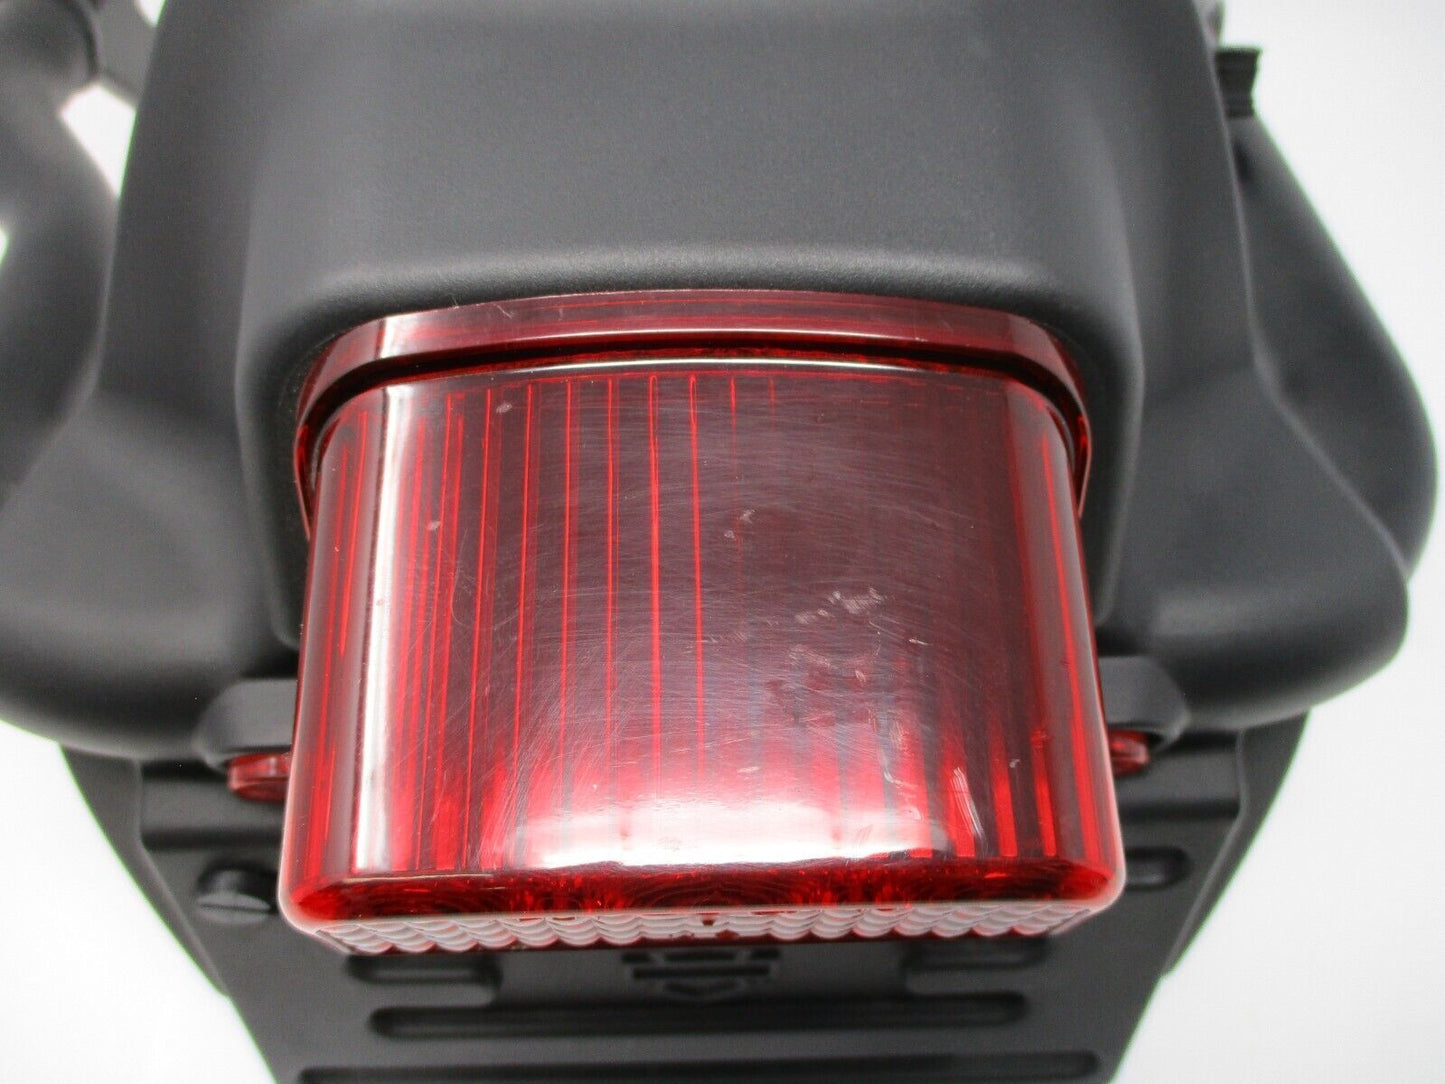 Harley Davidson OEM License Plate Bracket, Reflector and Tail Light 67900397